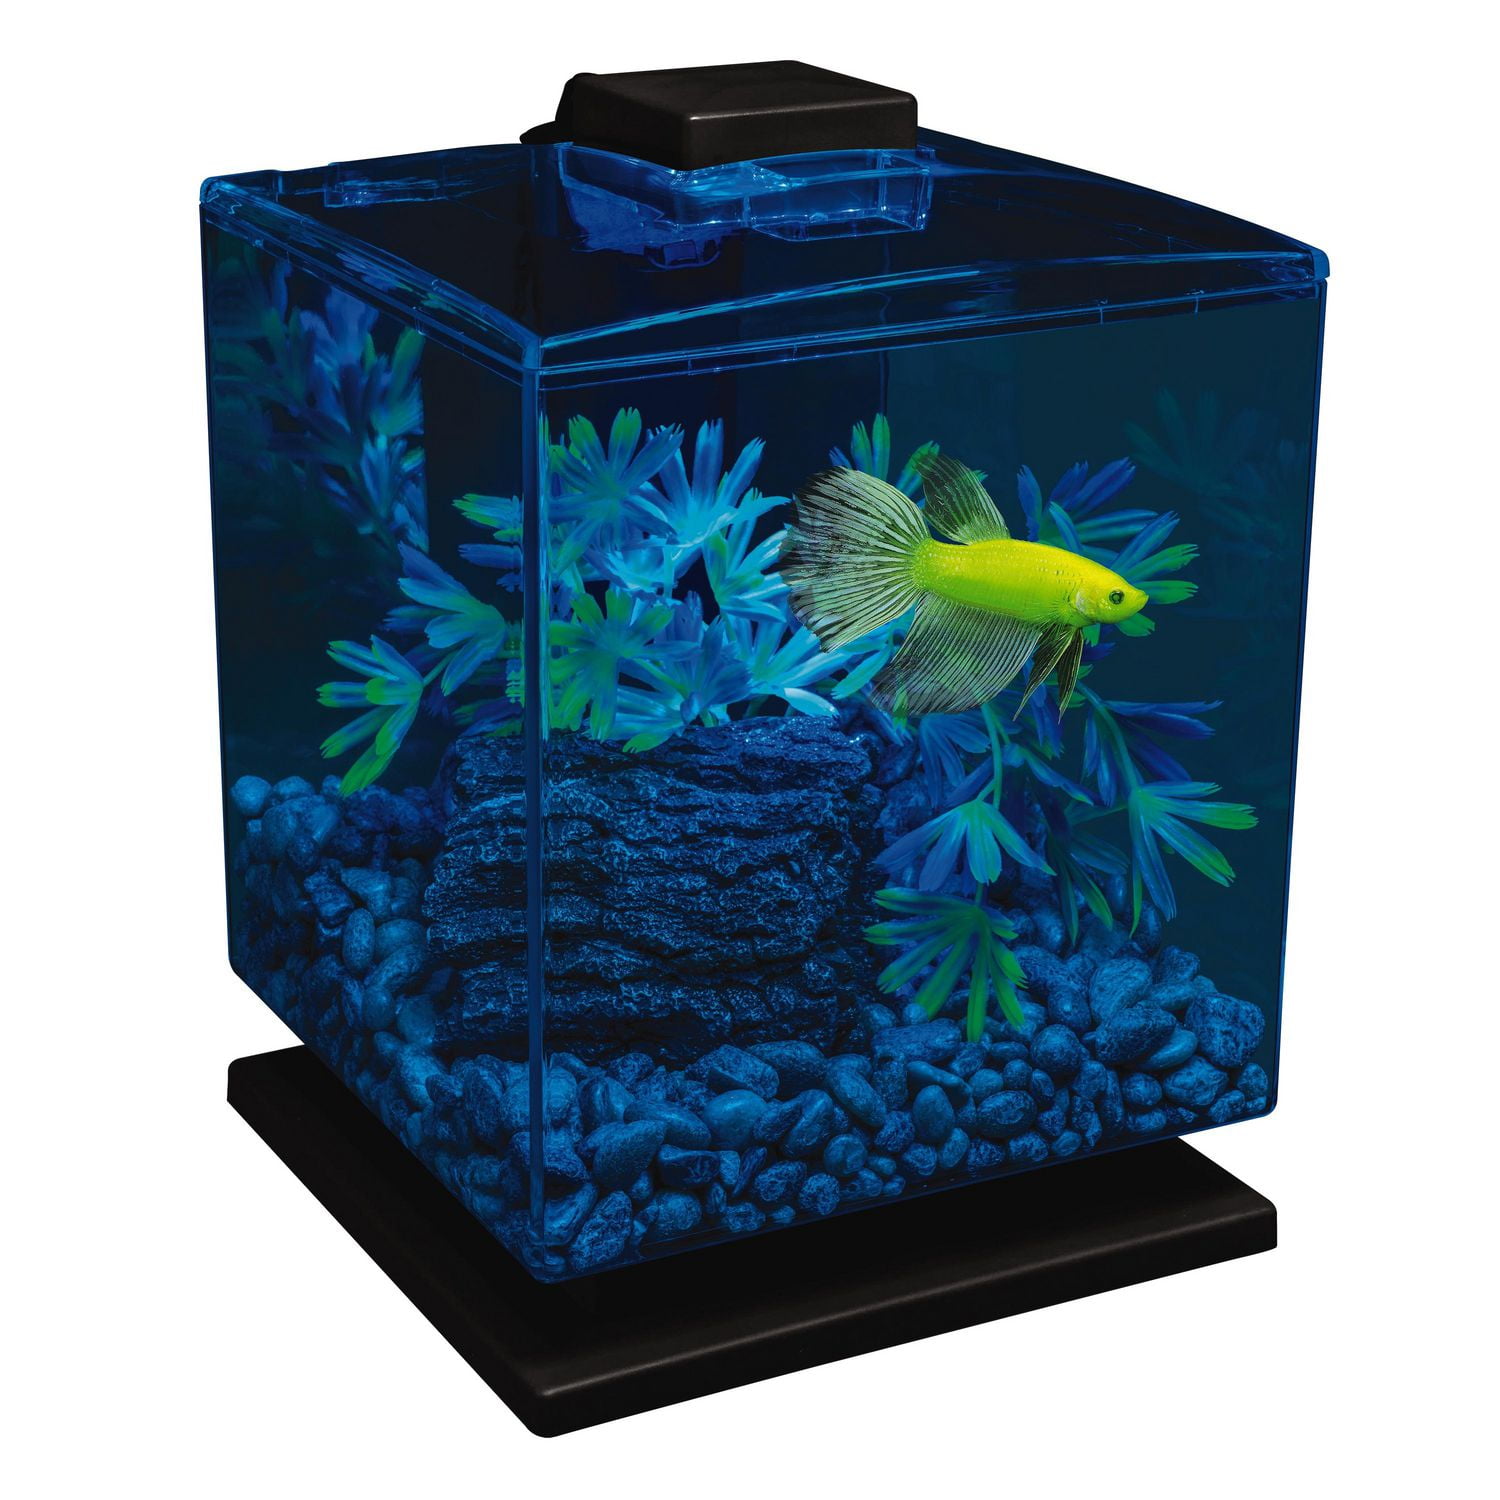 GloFish Aquarium Kit Perfect Starter Tank, 5 Gallon 